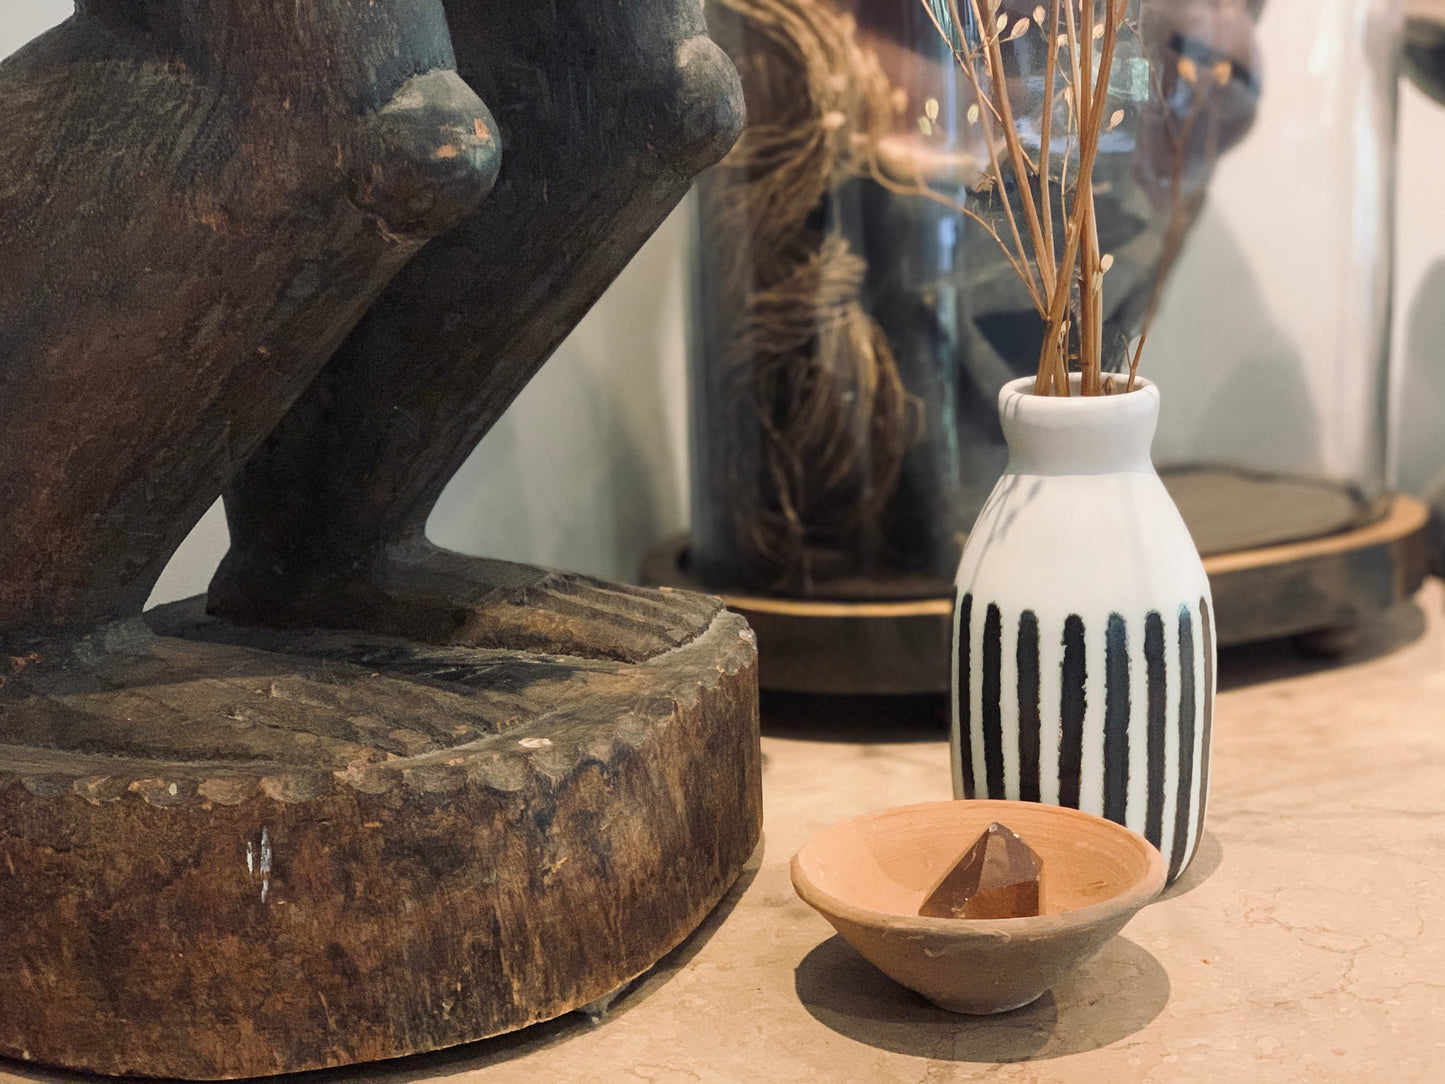 Handmade Terracotta Bowls